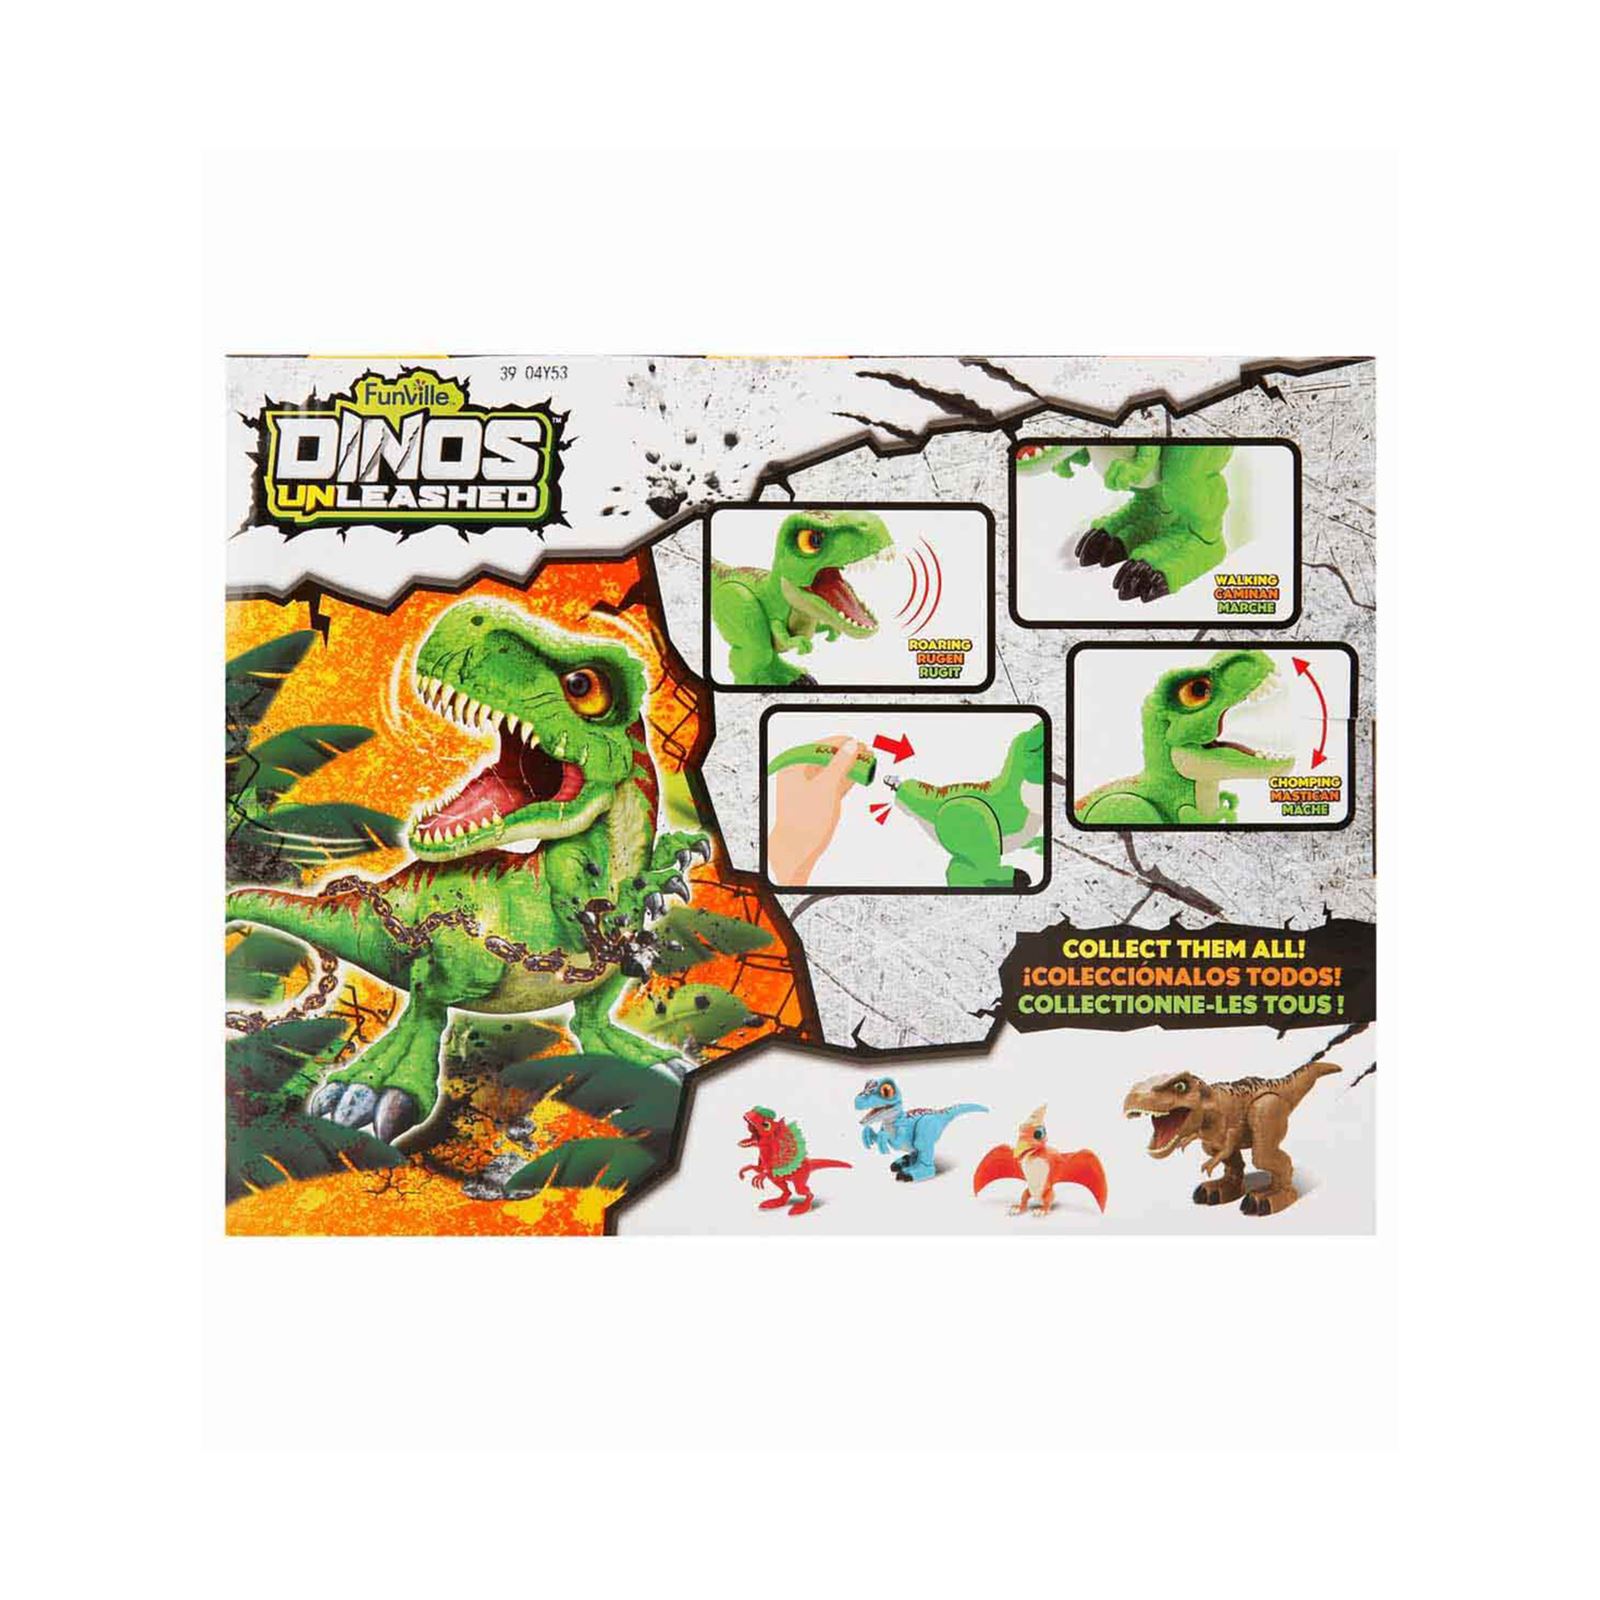 Crazoo Dino Sesli ve Hareketli T Rex Jr Dinozor Yeşil